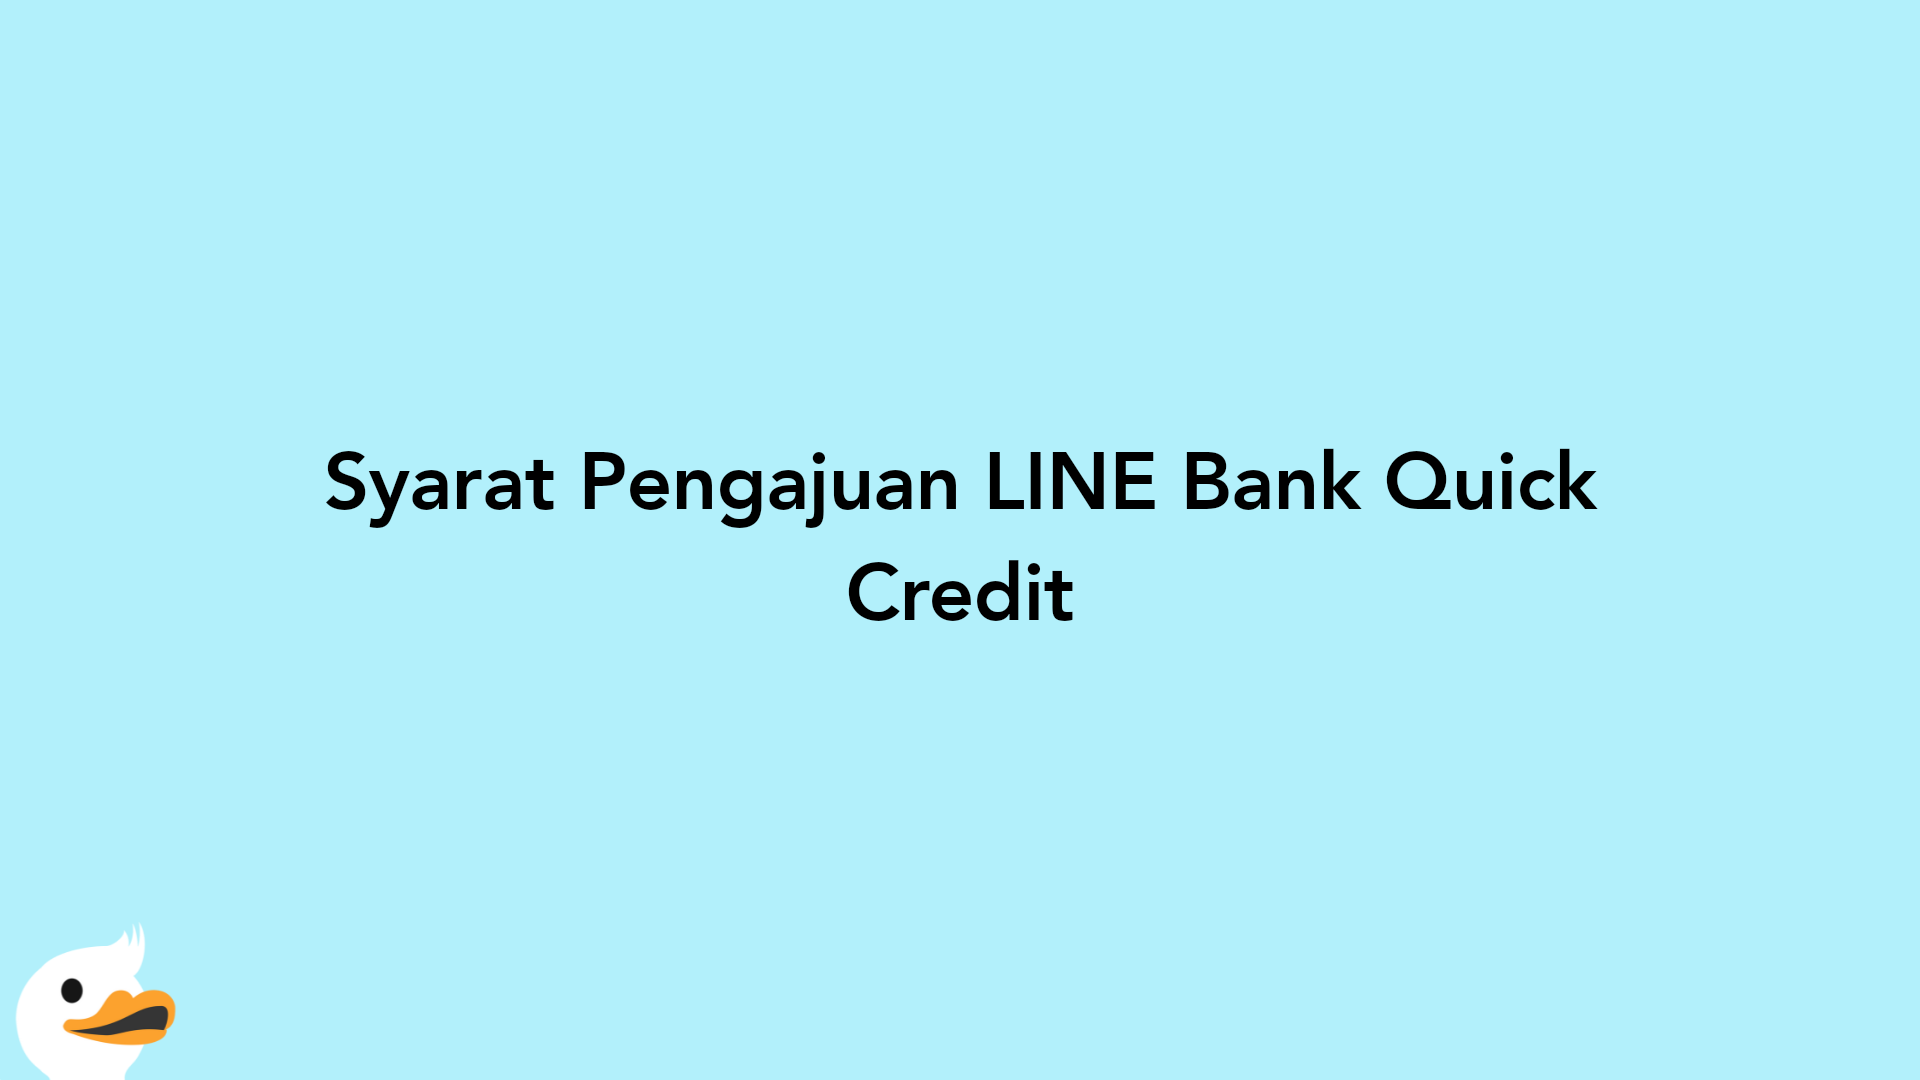 Syarat Pengajuan LINE Bank Quick Credit